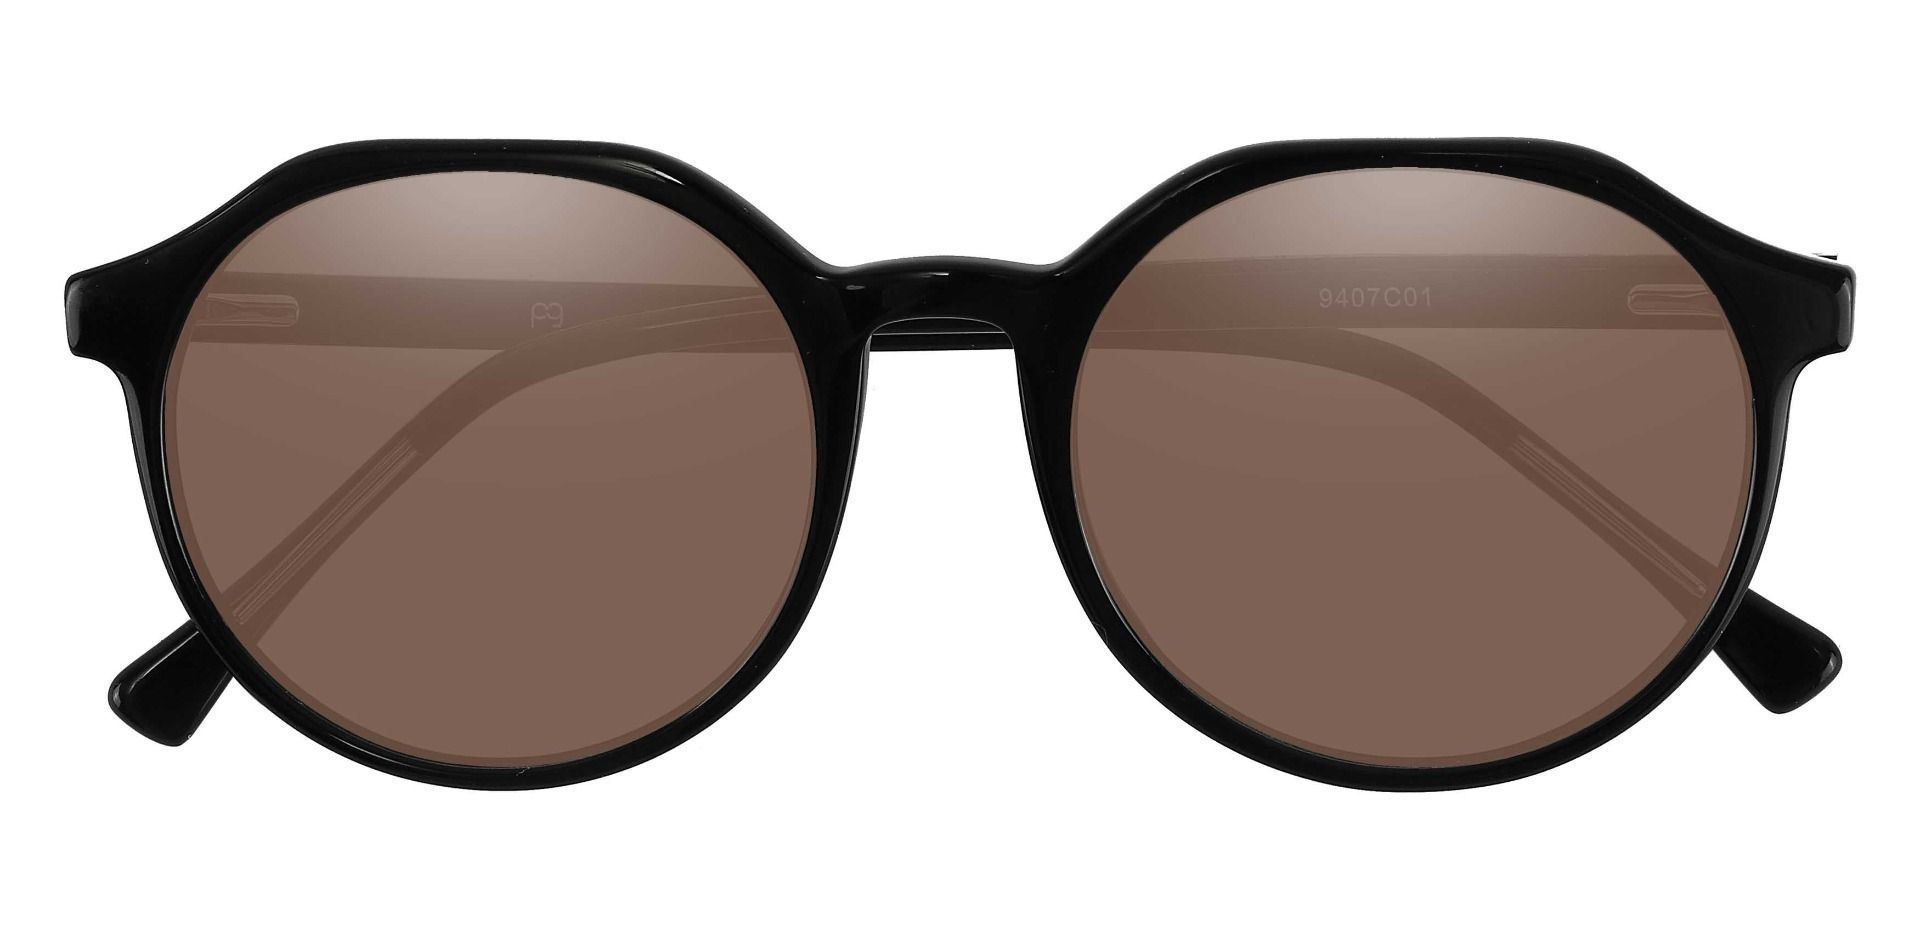 Tucker Geometric Non-Rx Sunglasses - Black Frame With Brown Lenses